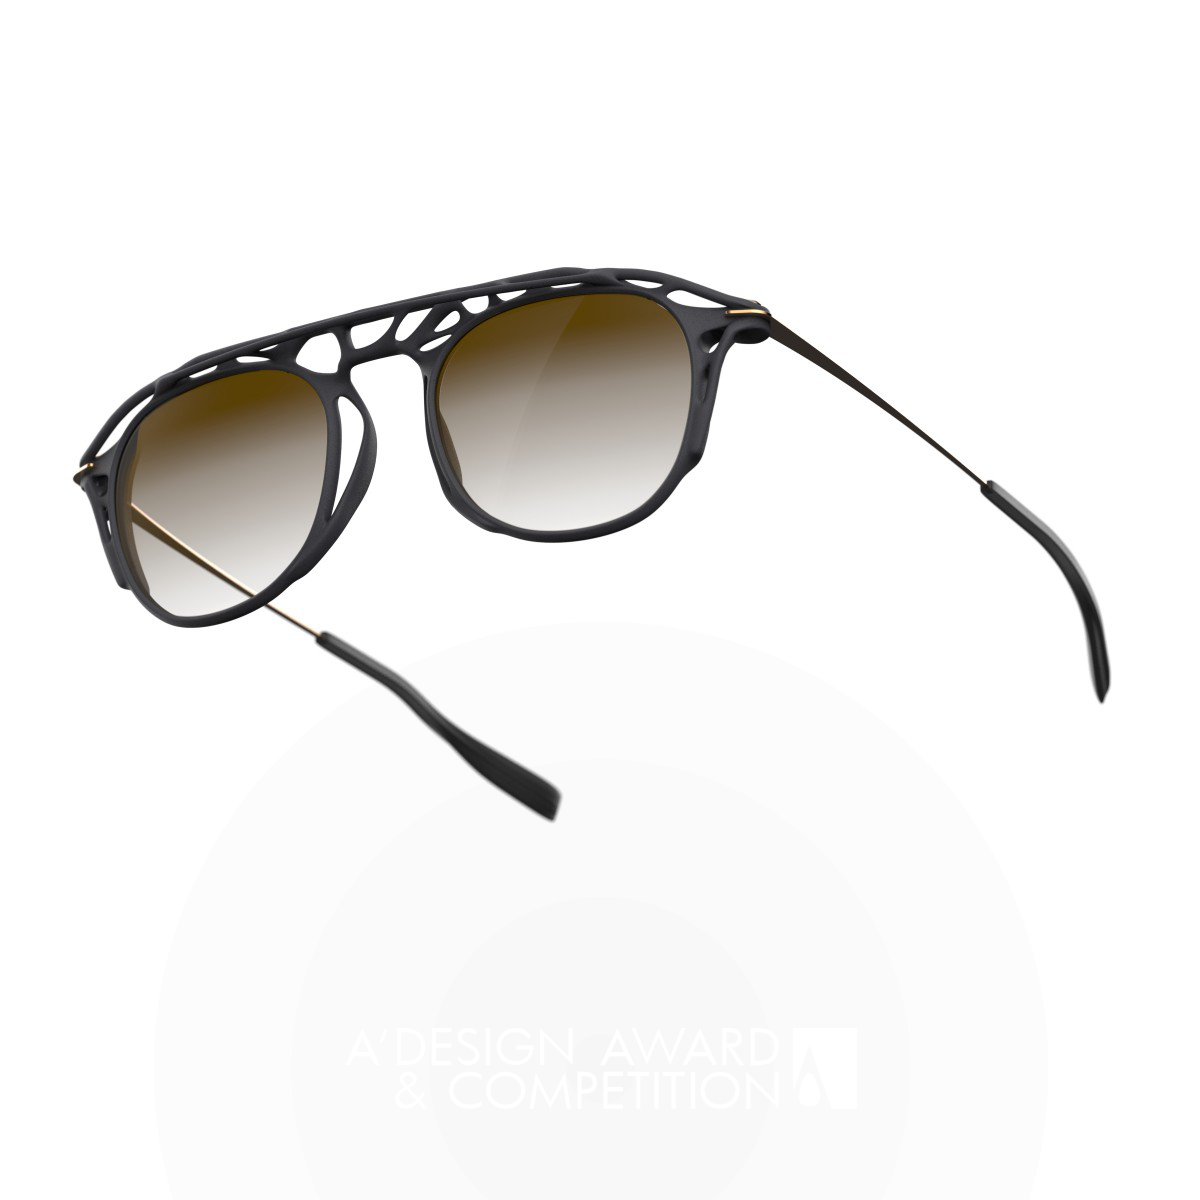 Jam Vision X Sbrusset Sunglasses by Brusset Sébastien